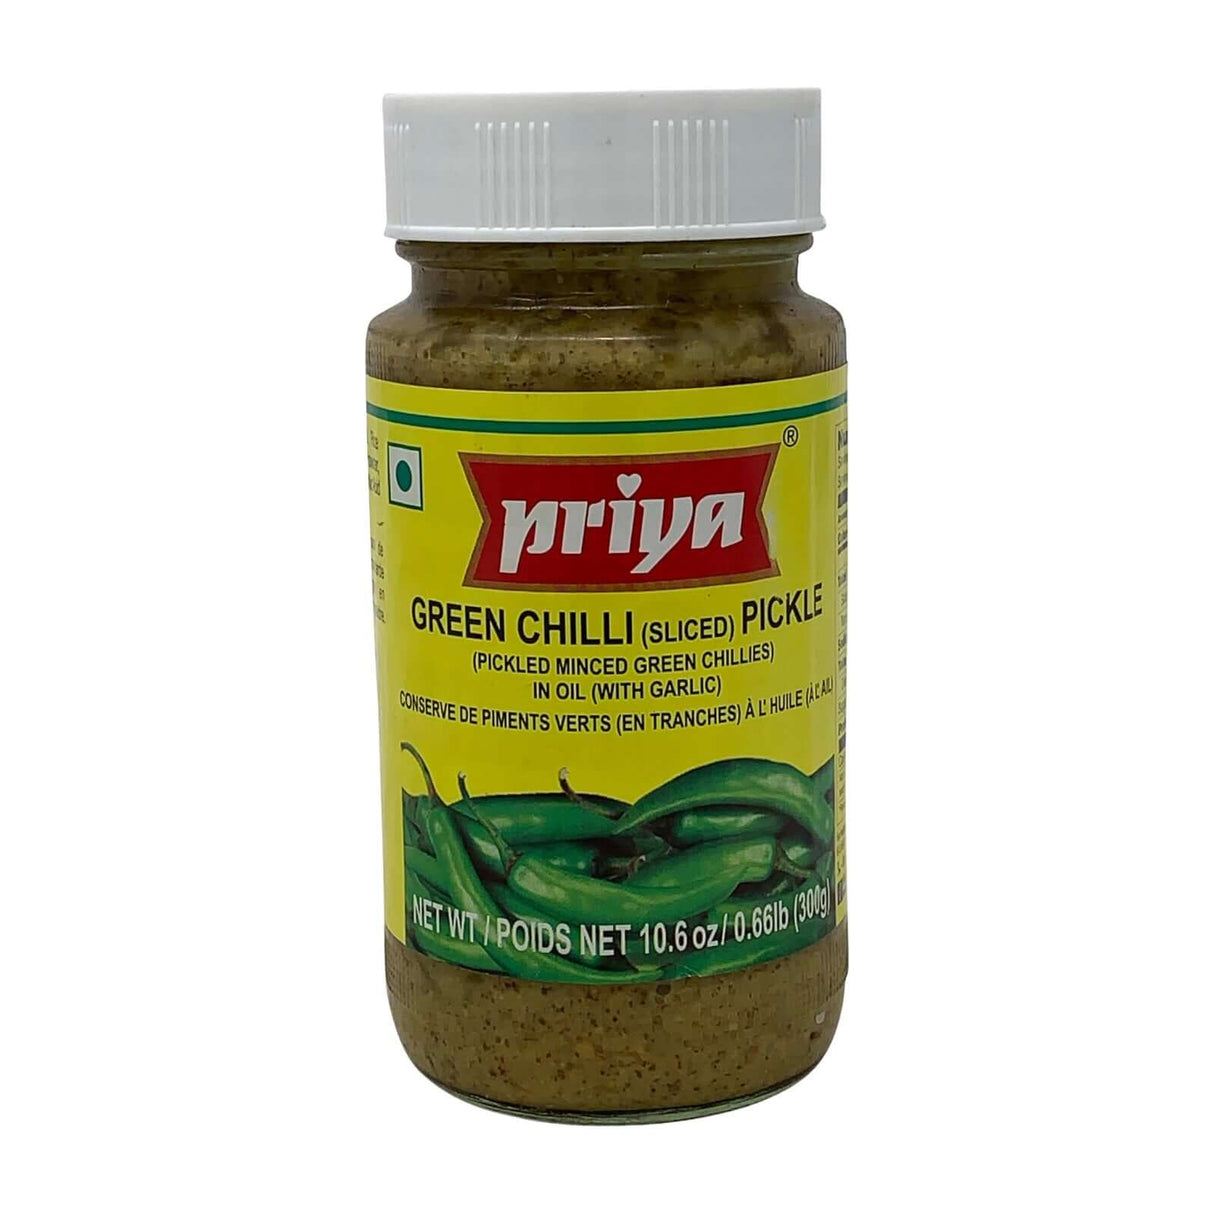 Priya Green Chilli (Sliced) Pickle in Oil (with Garlic)